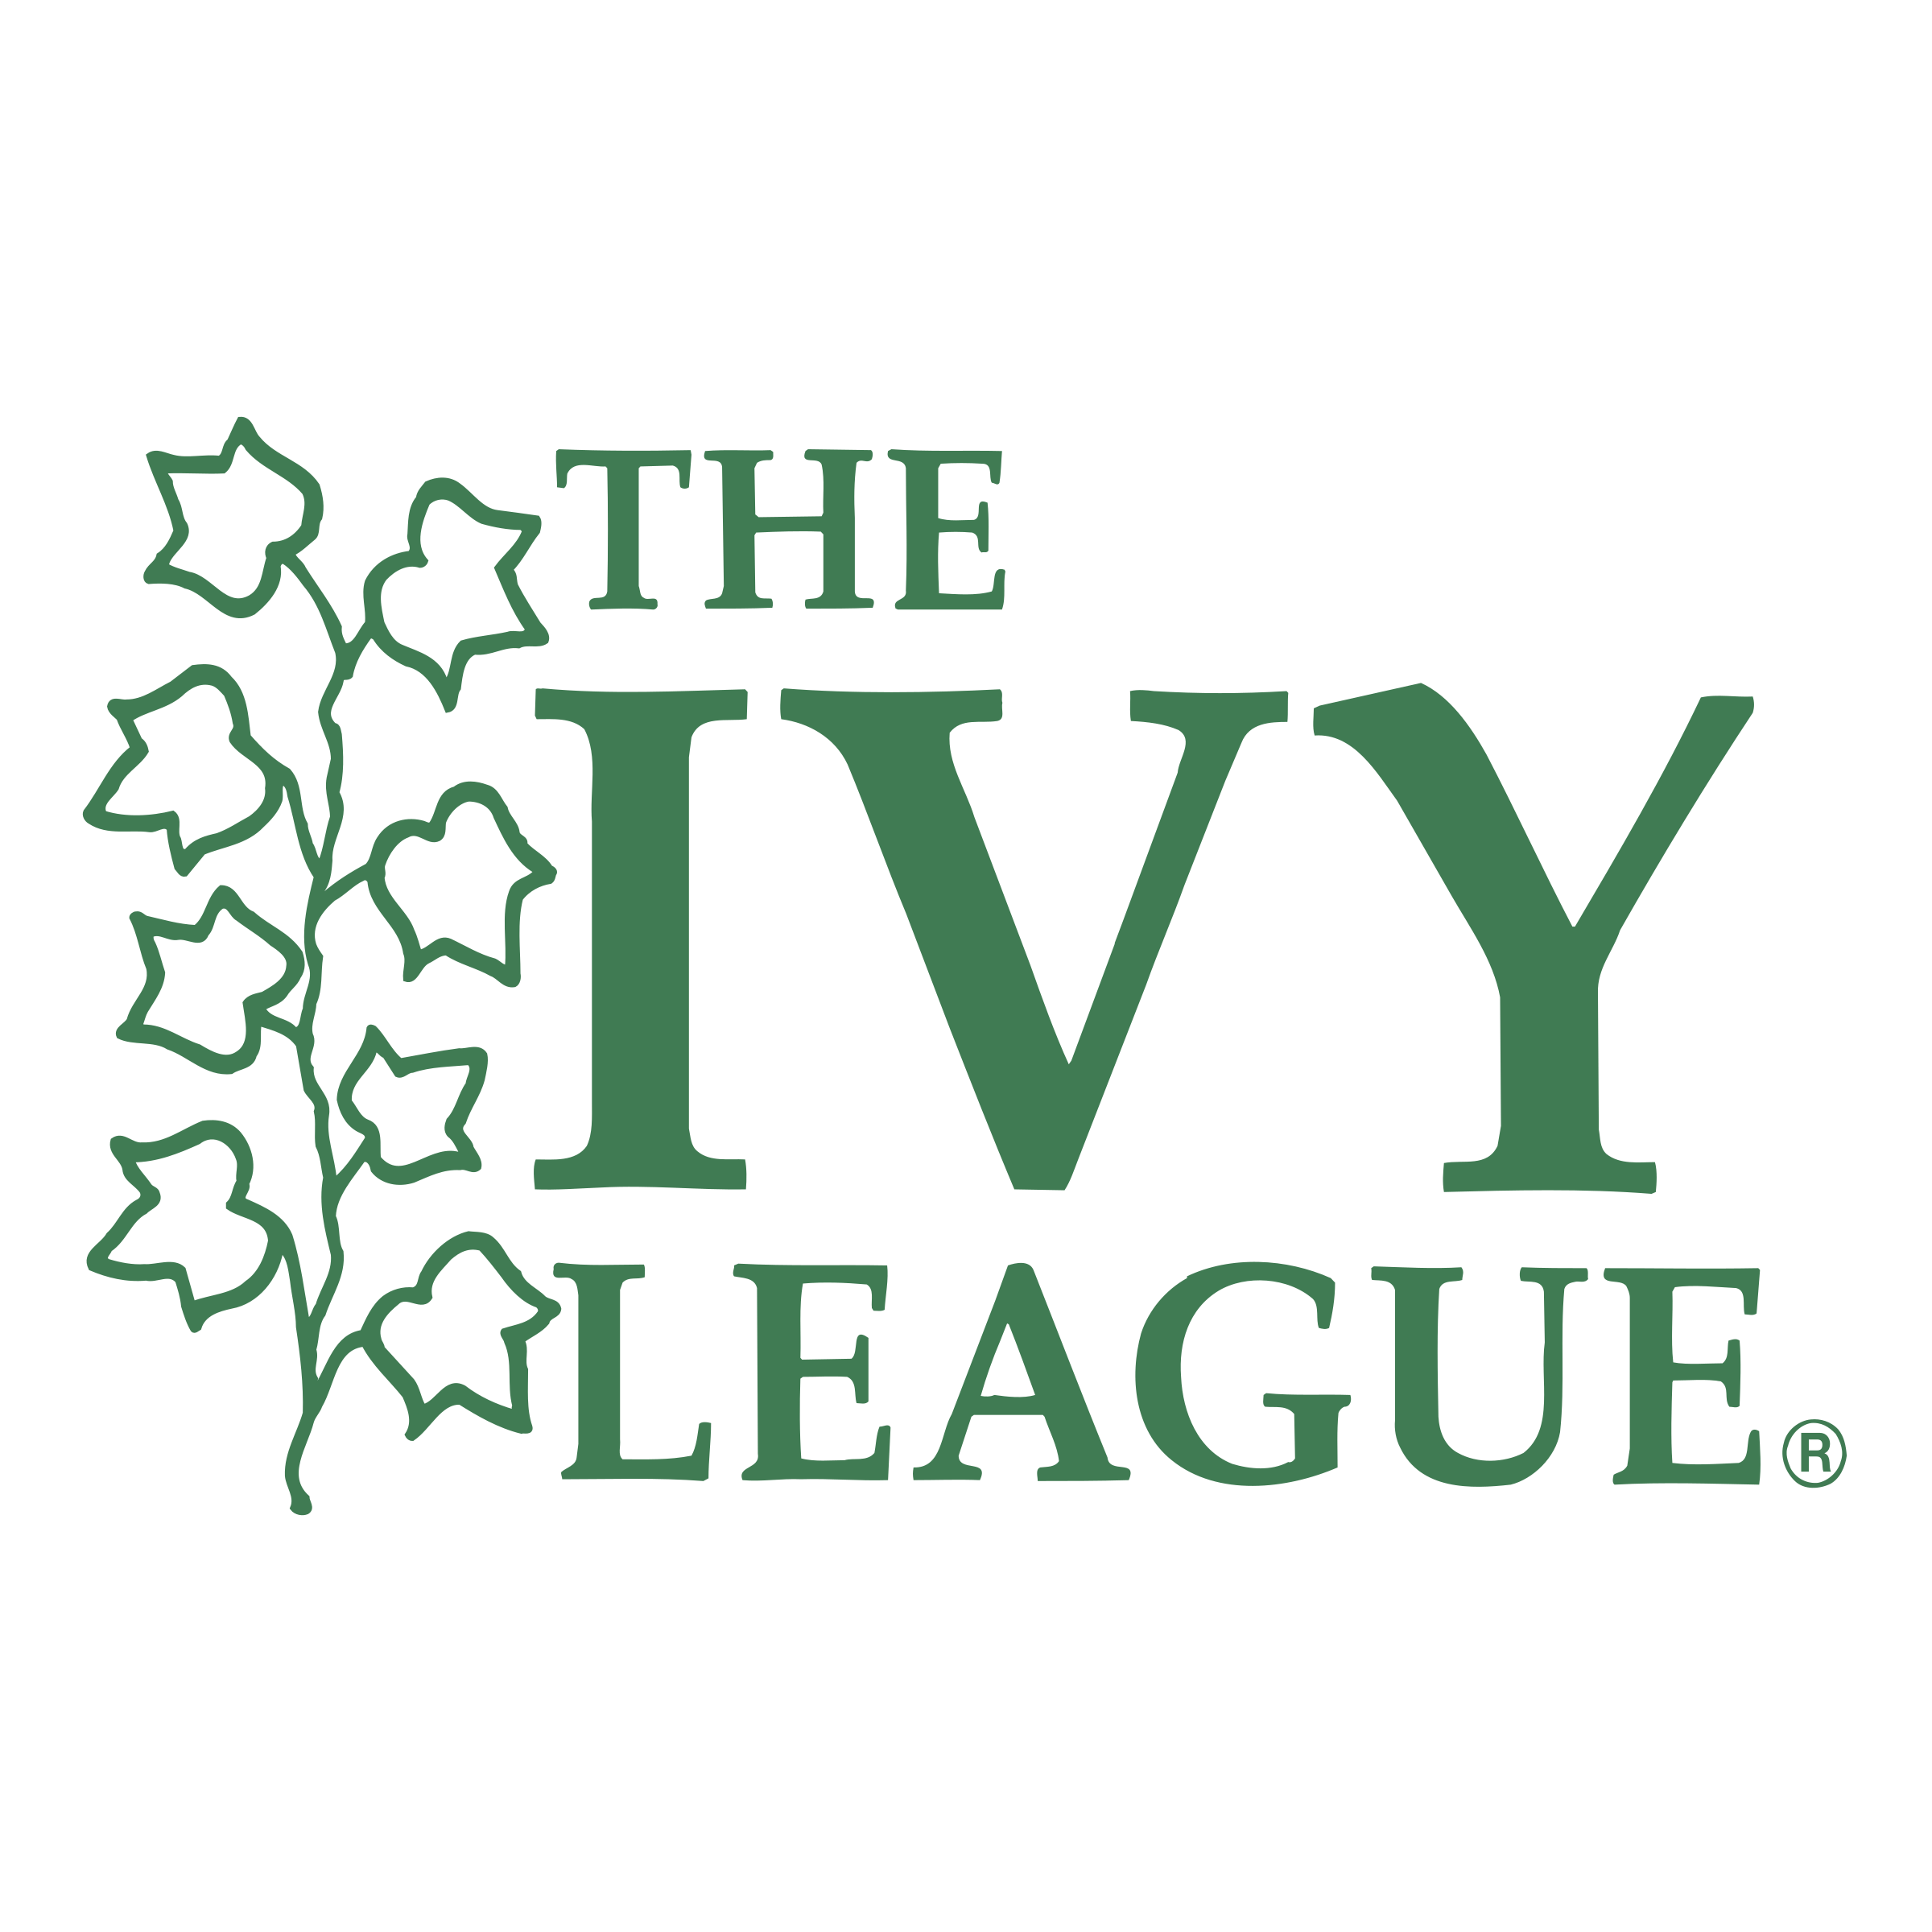 Ivy Logo - The Ivy League Logo PNG Transparent & SVG Vector - Freebie Supply